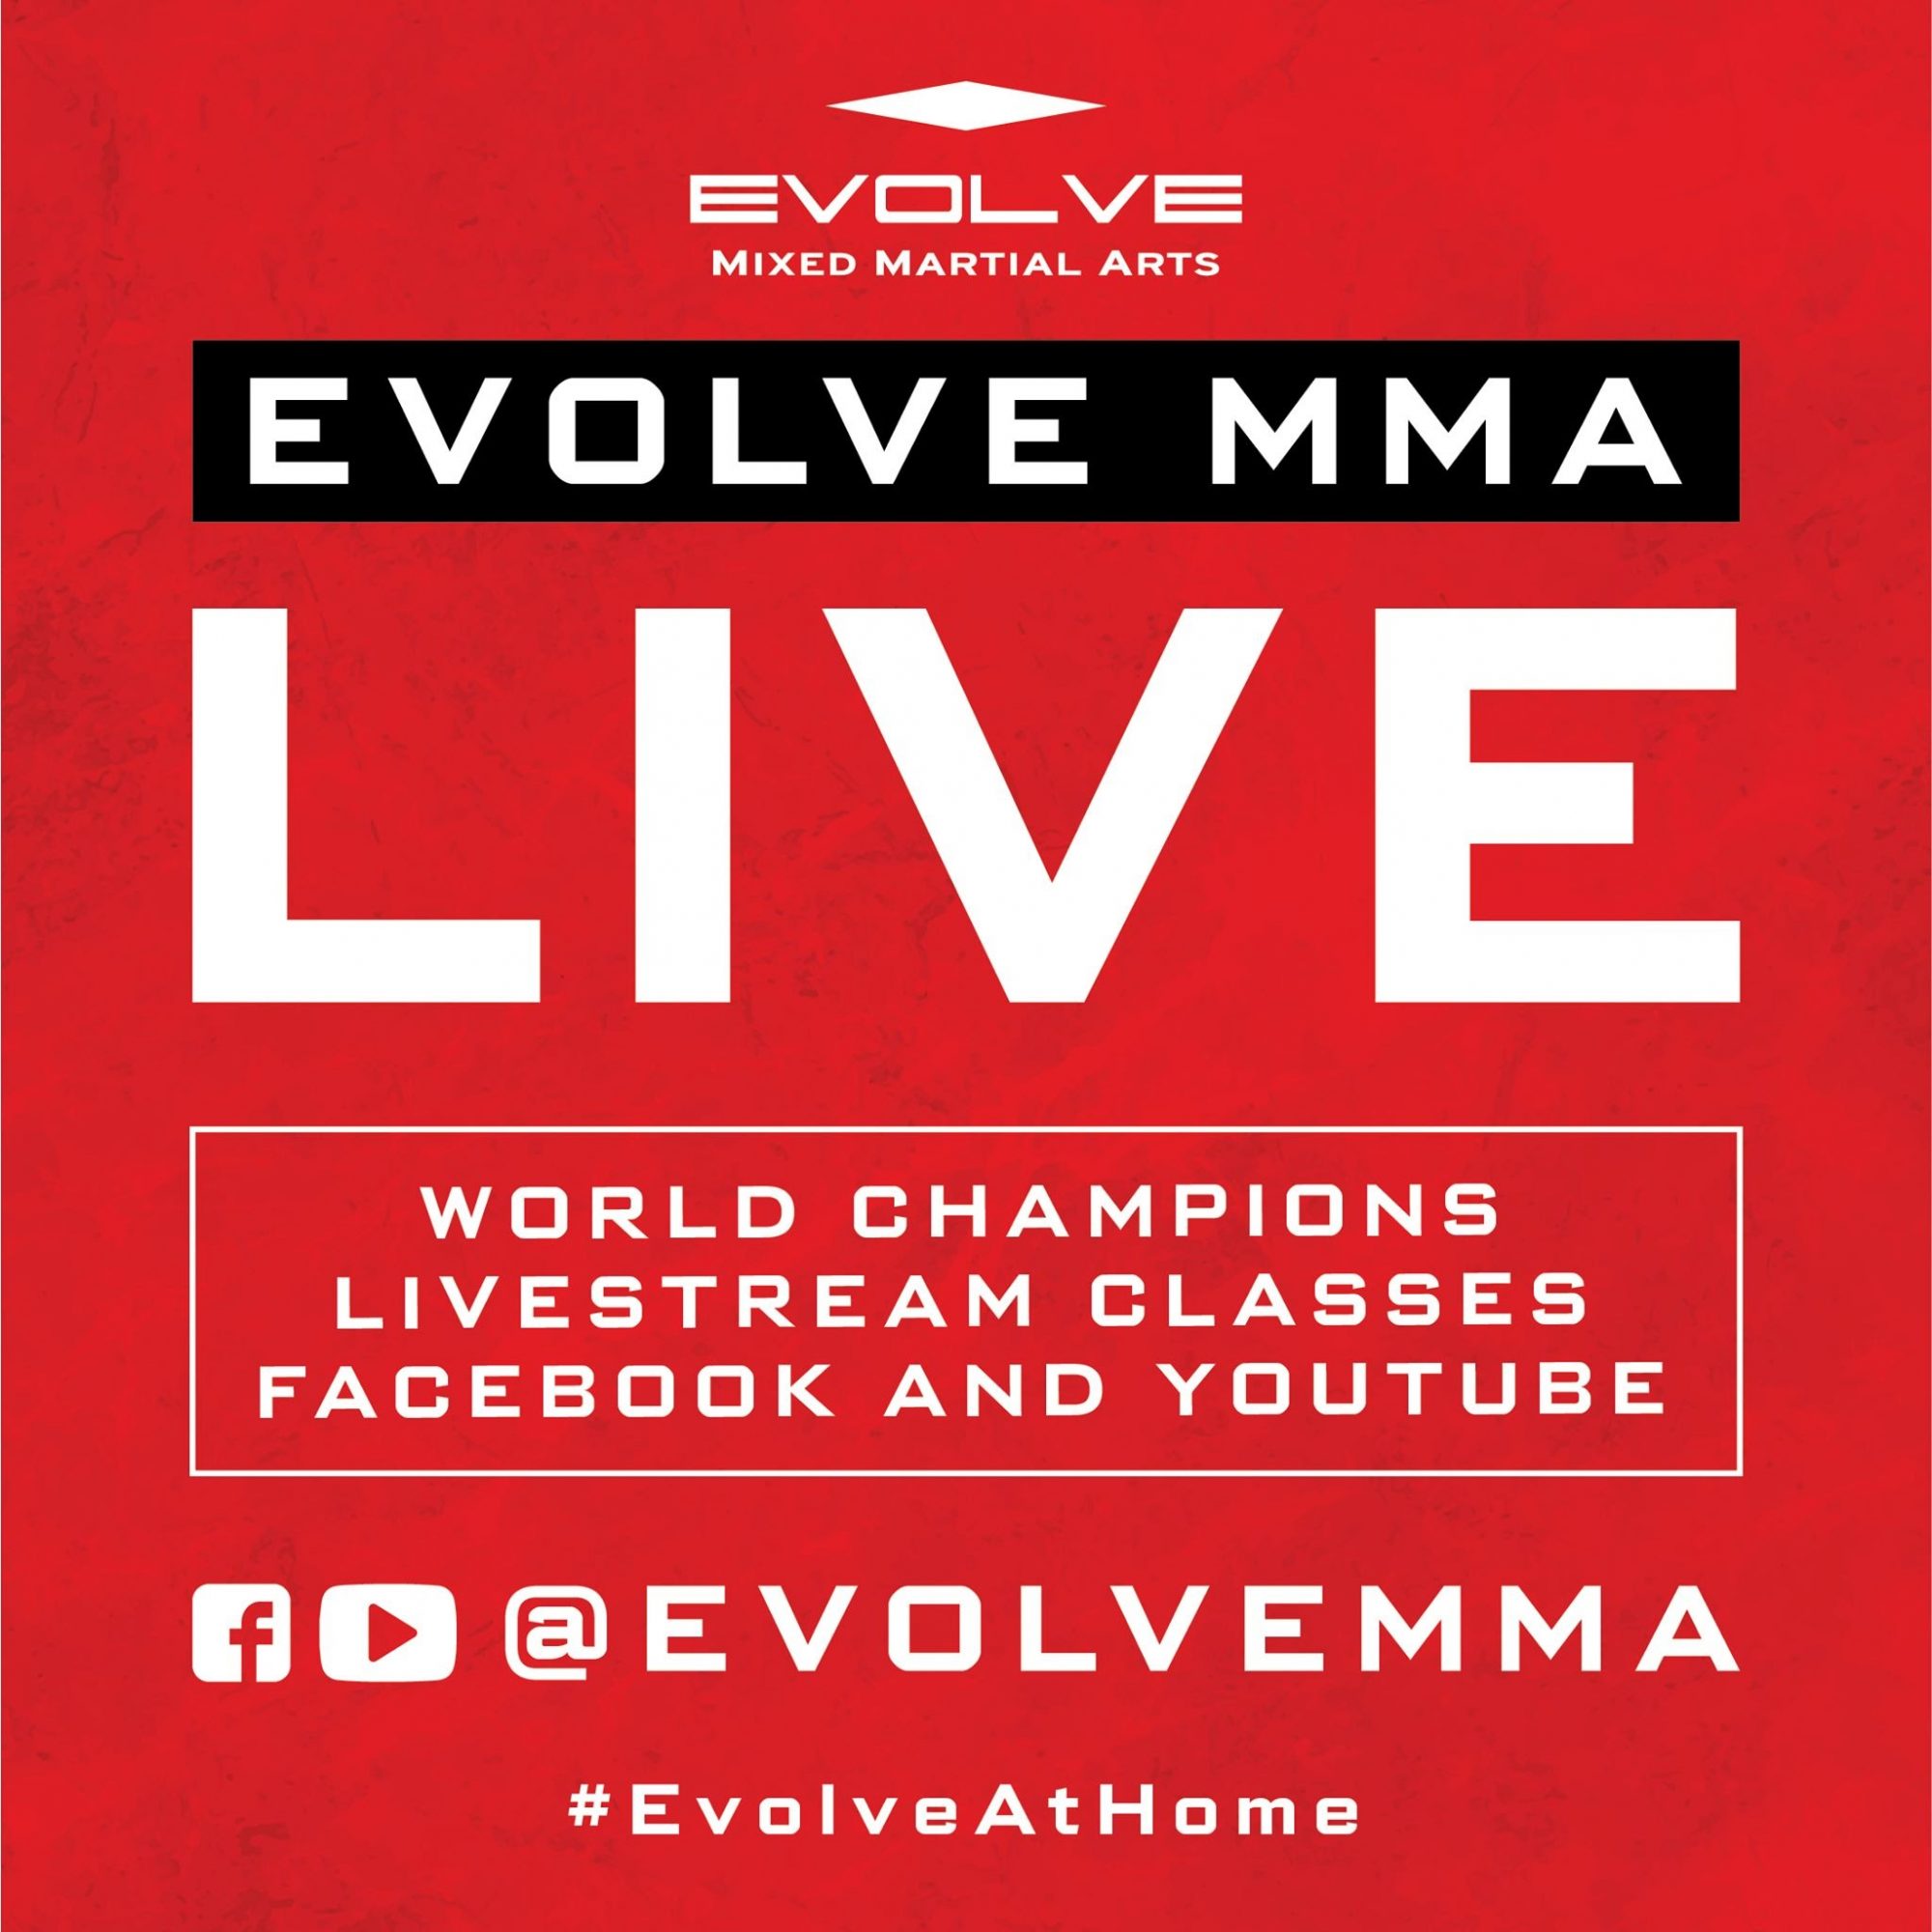 Evolve MMA free online classes kicked off ASTIG.PH